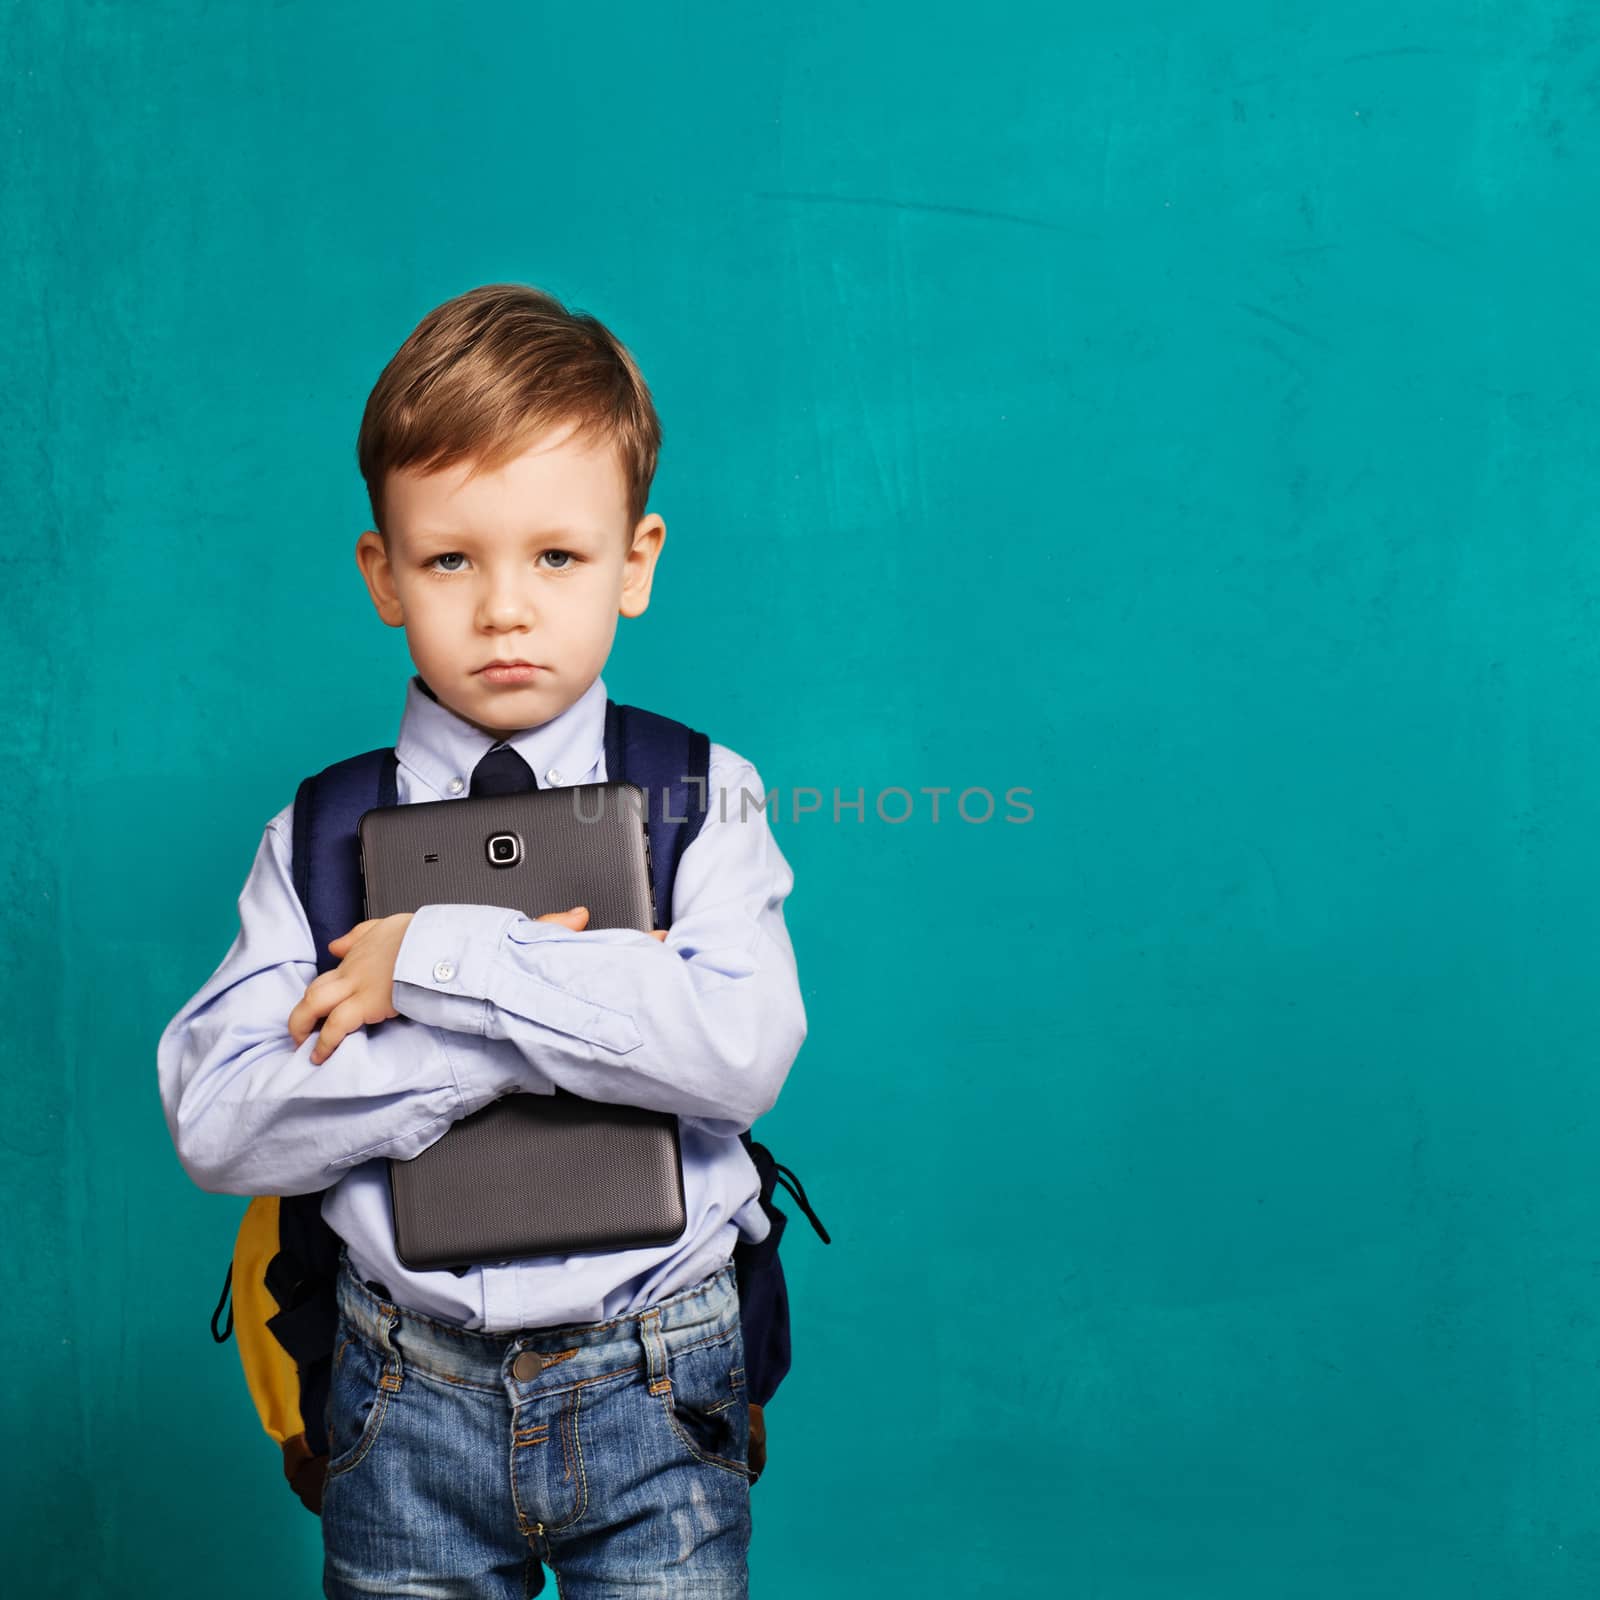 Cheerful smiling little boy with big backpack holding digital ta by natazhekova